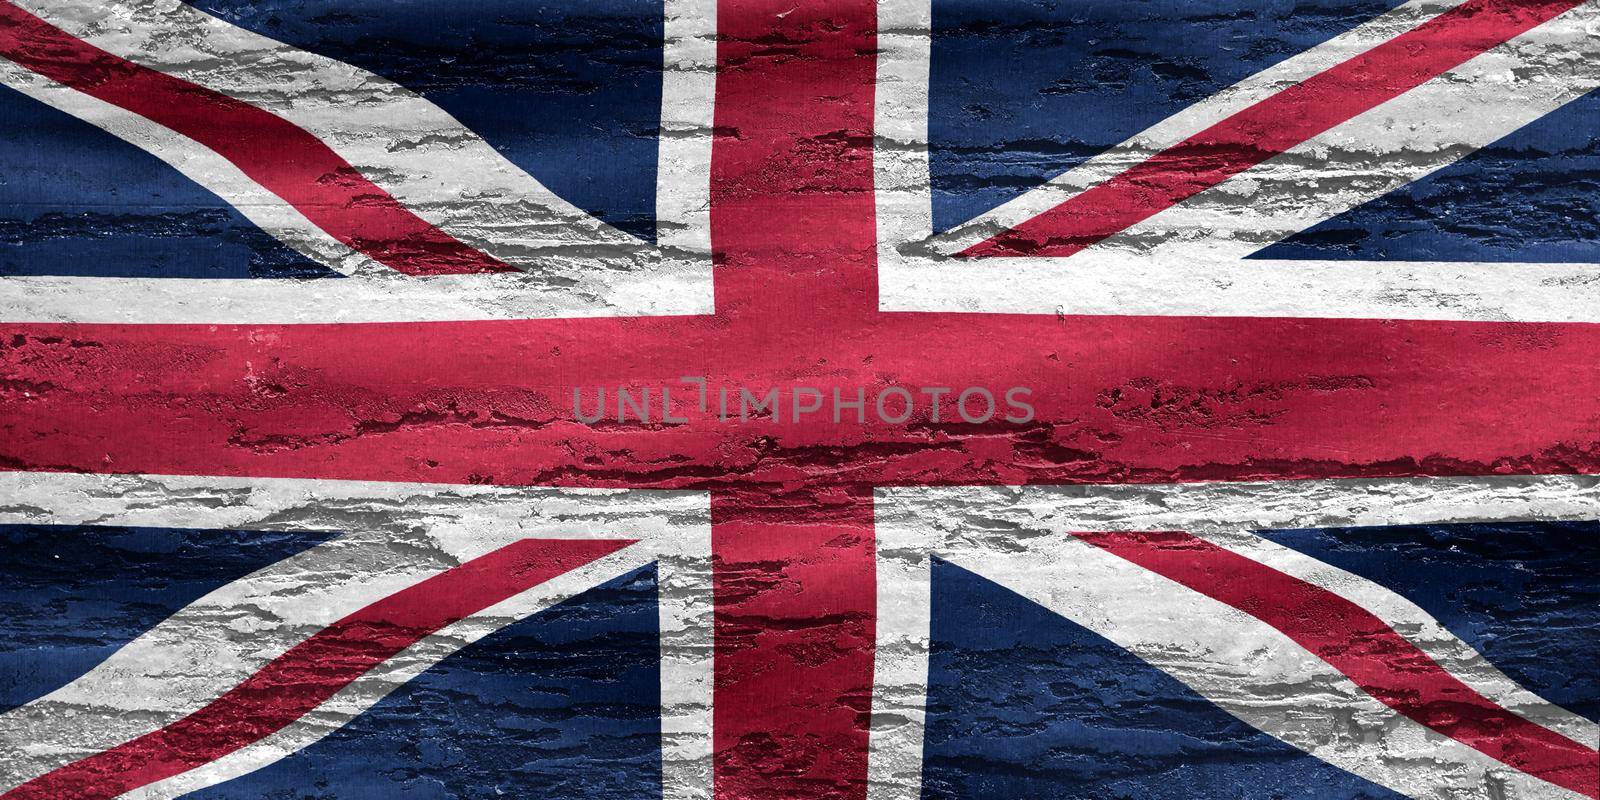 United Kingdom flag - realistic waving fabric flag